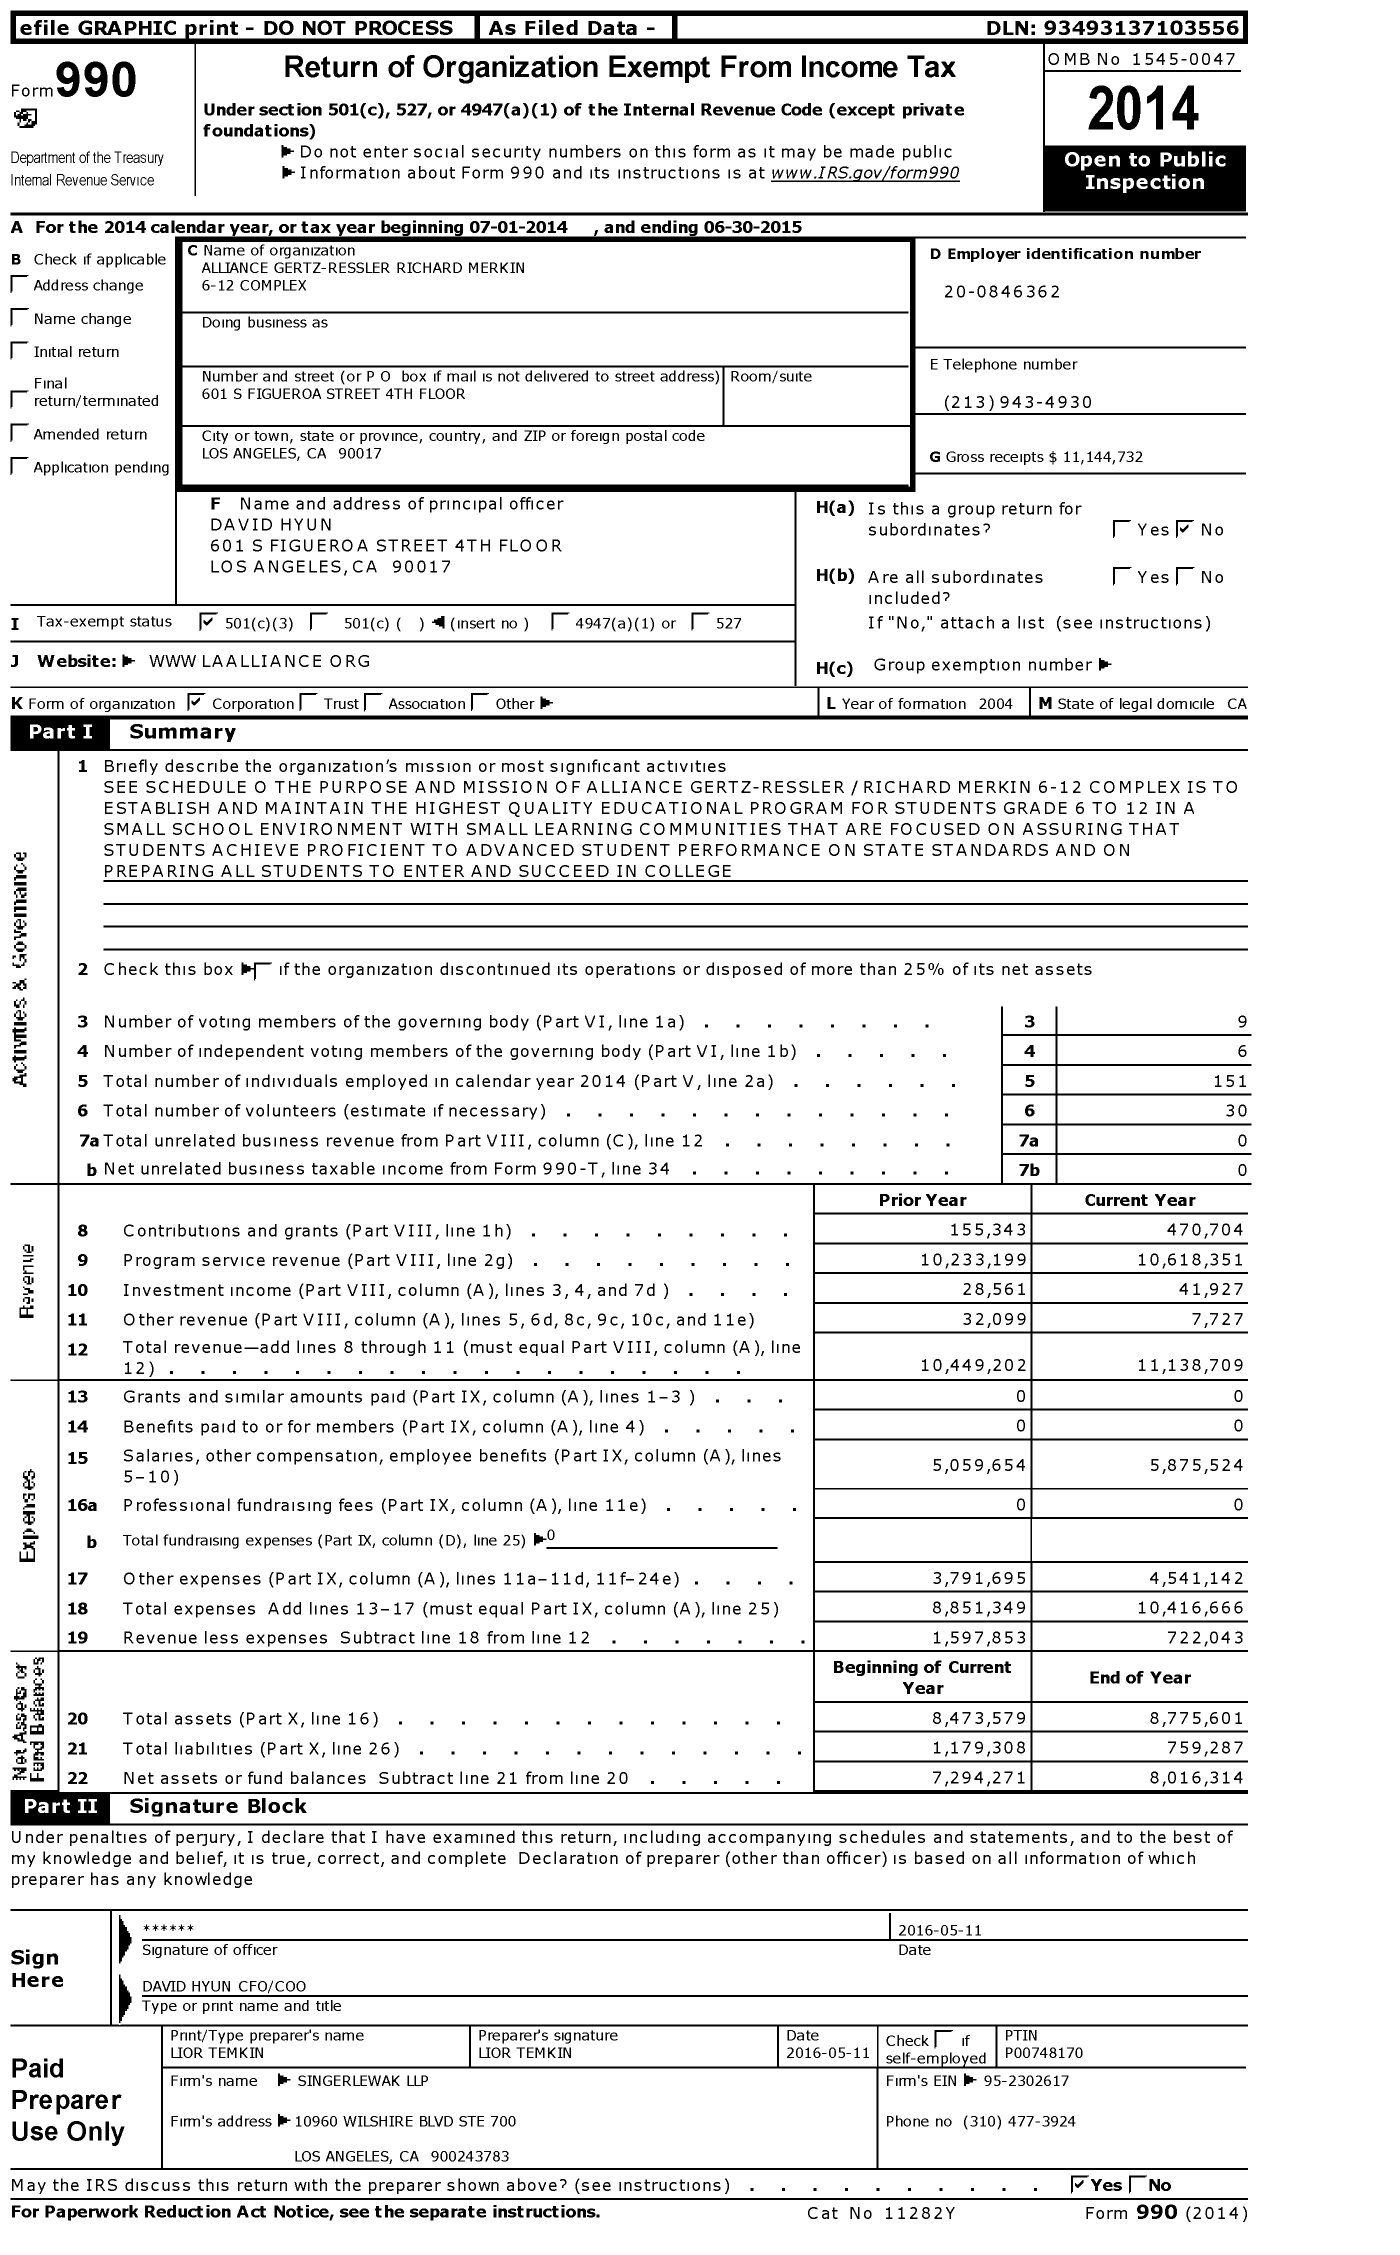 Image of first page of 2014 Form 990 for Alliance Gertz-Ressler Richard Merkin 6-12 Complex